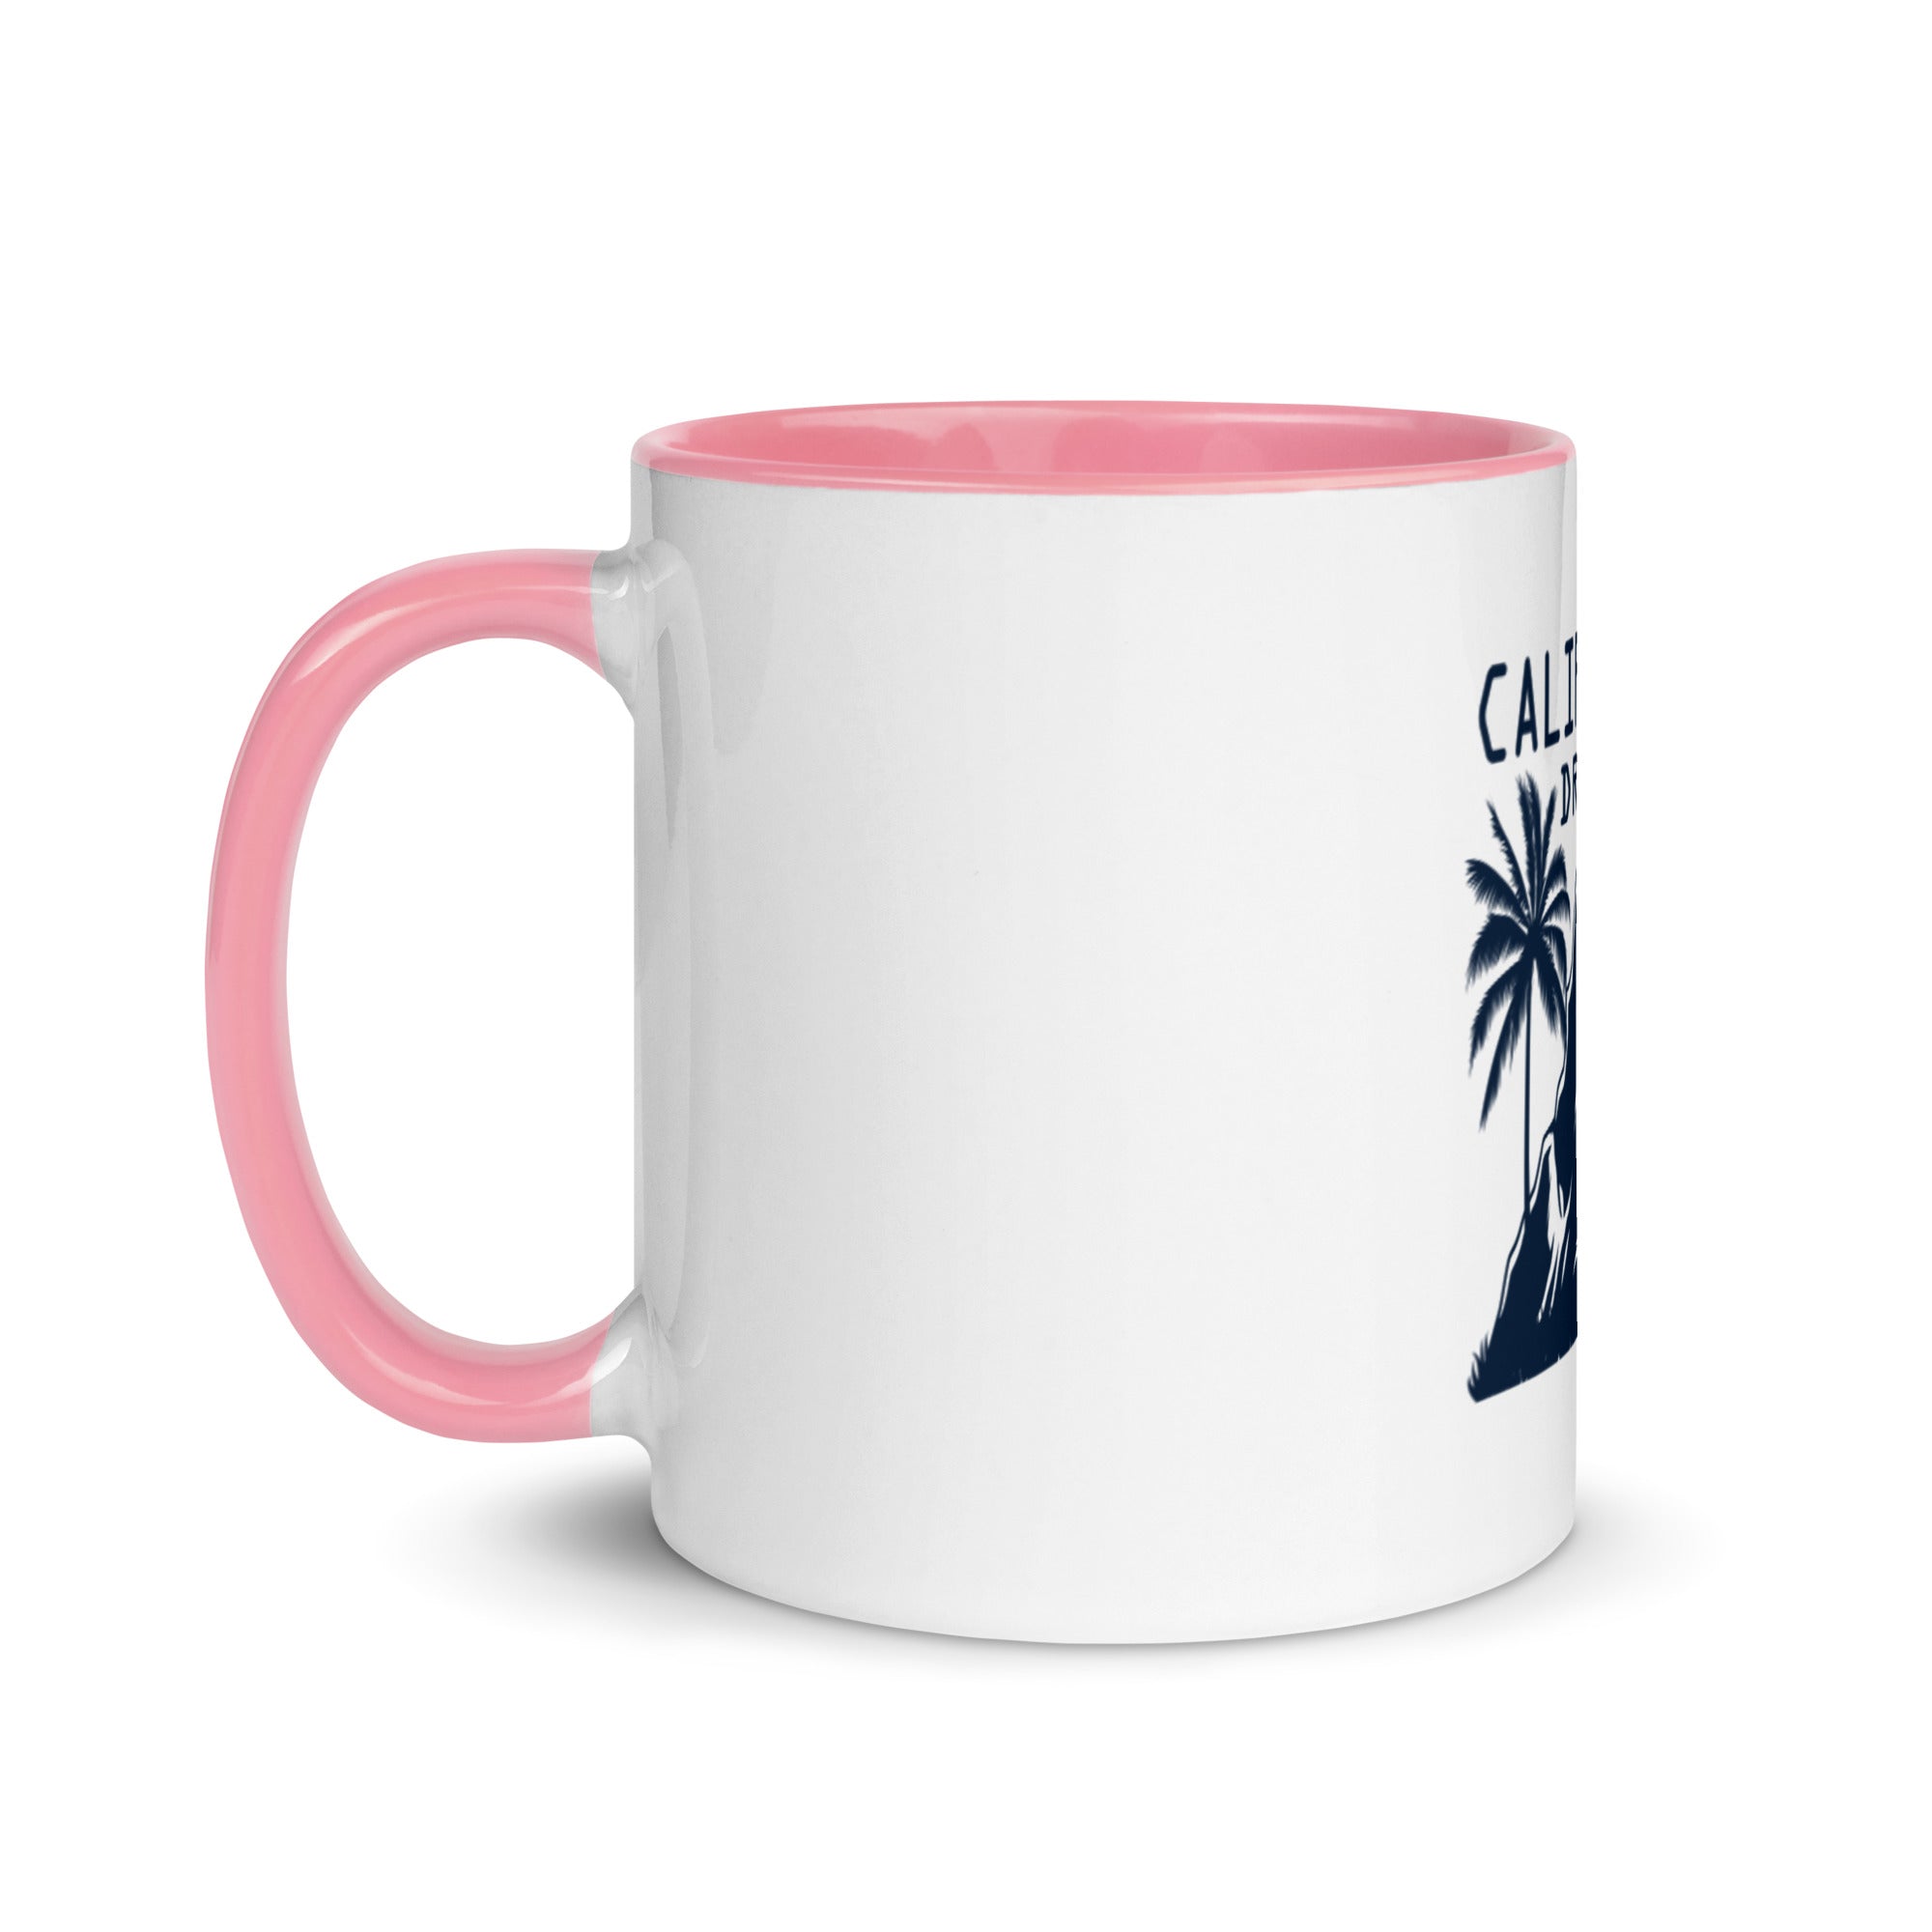 California Dreaming - Mug with Color Inside